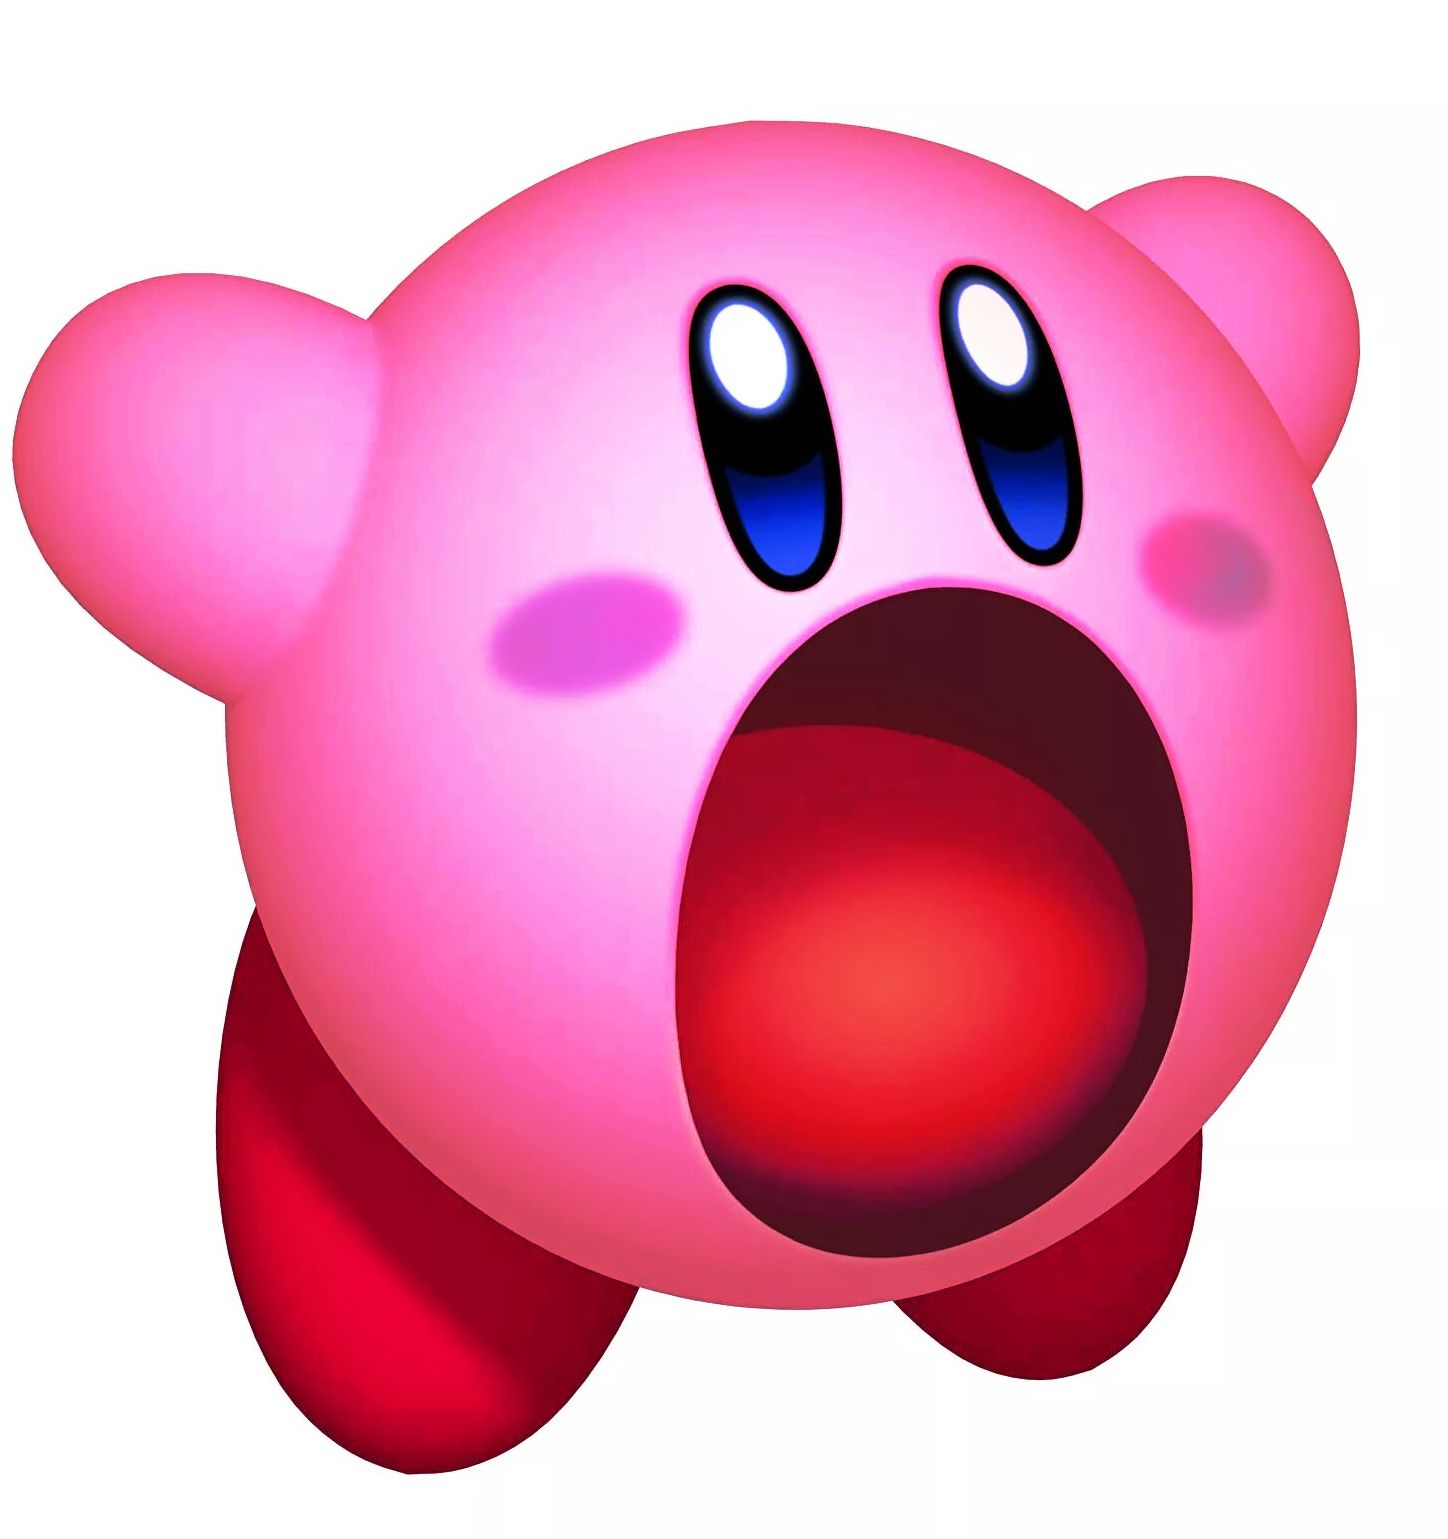 Imgagen con Kirby aspirando fuerte